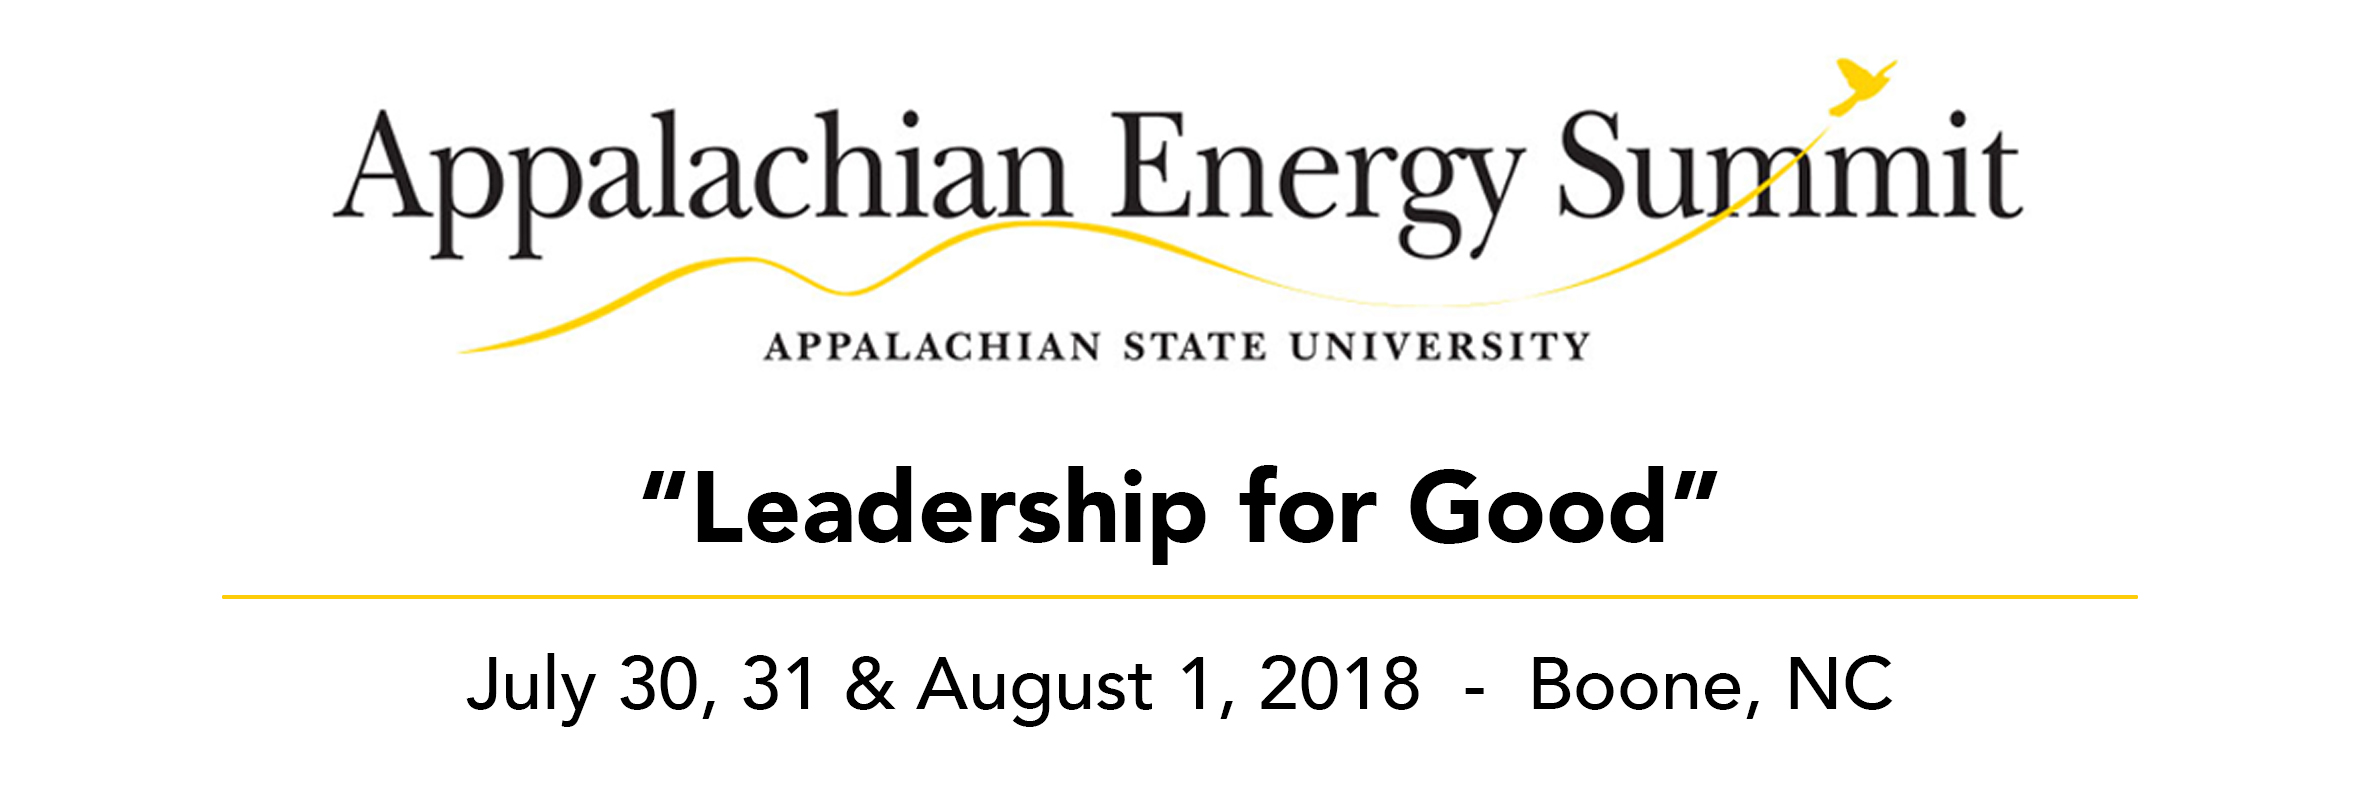 2018 Appalachian Energy Summit